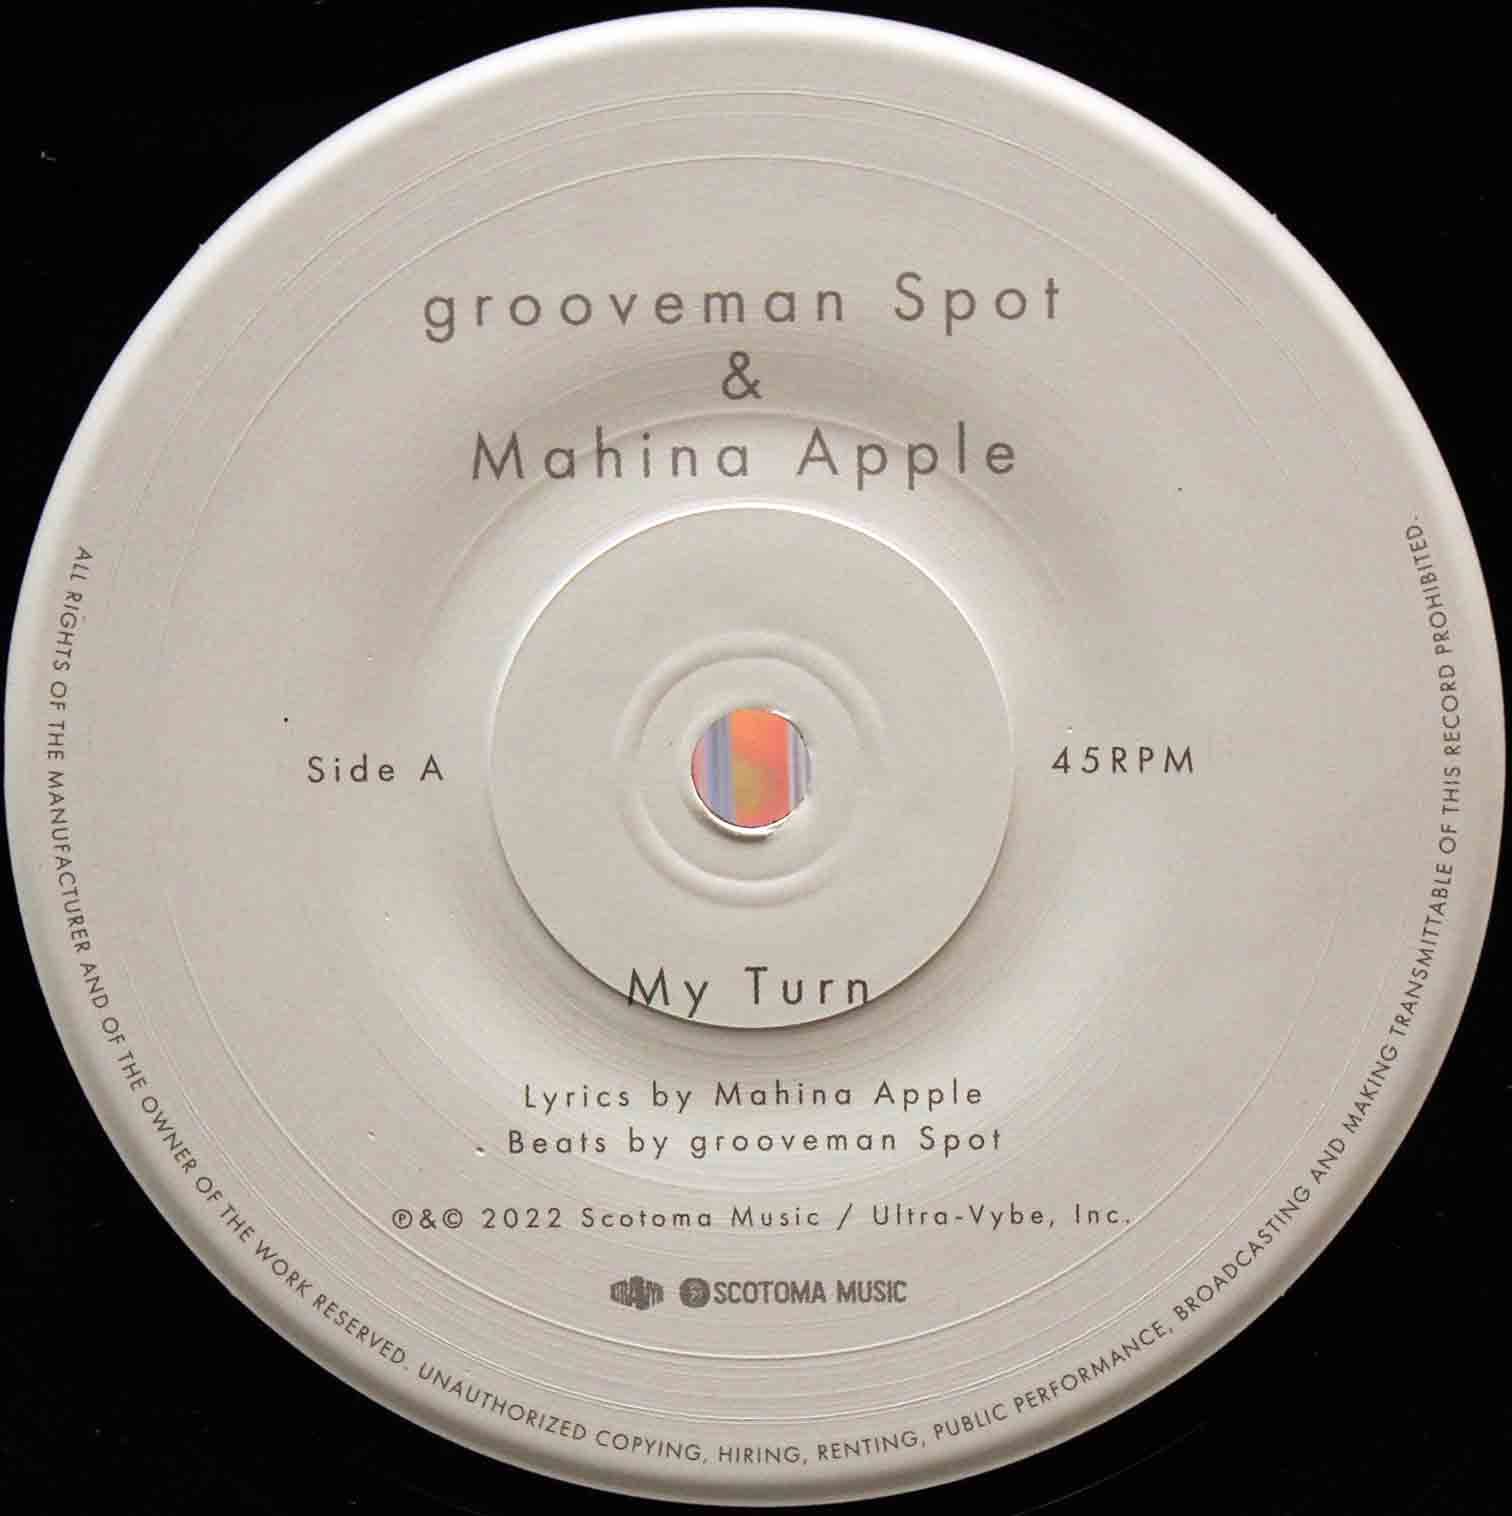 grooveman Spot Mahina Apple - My Turn 03